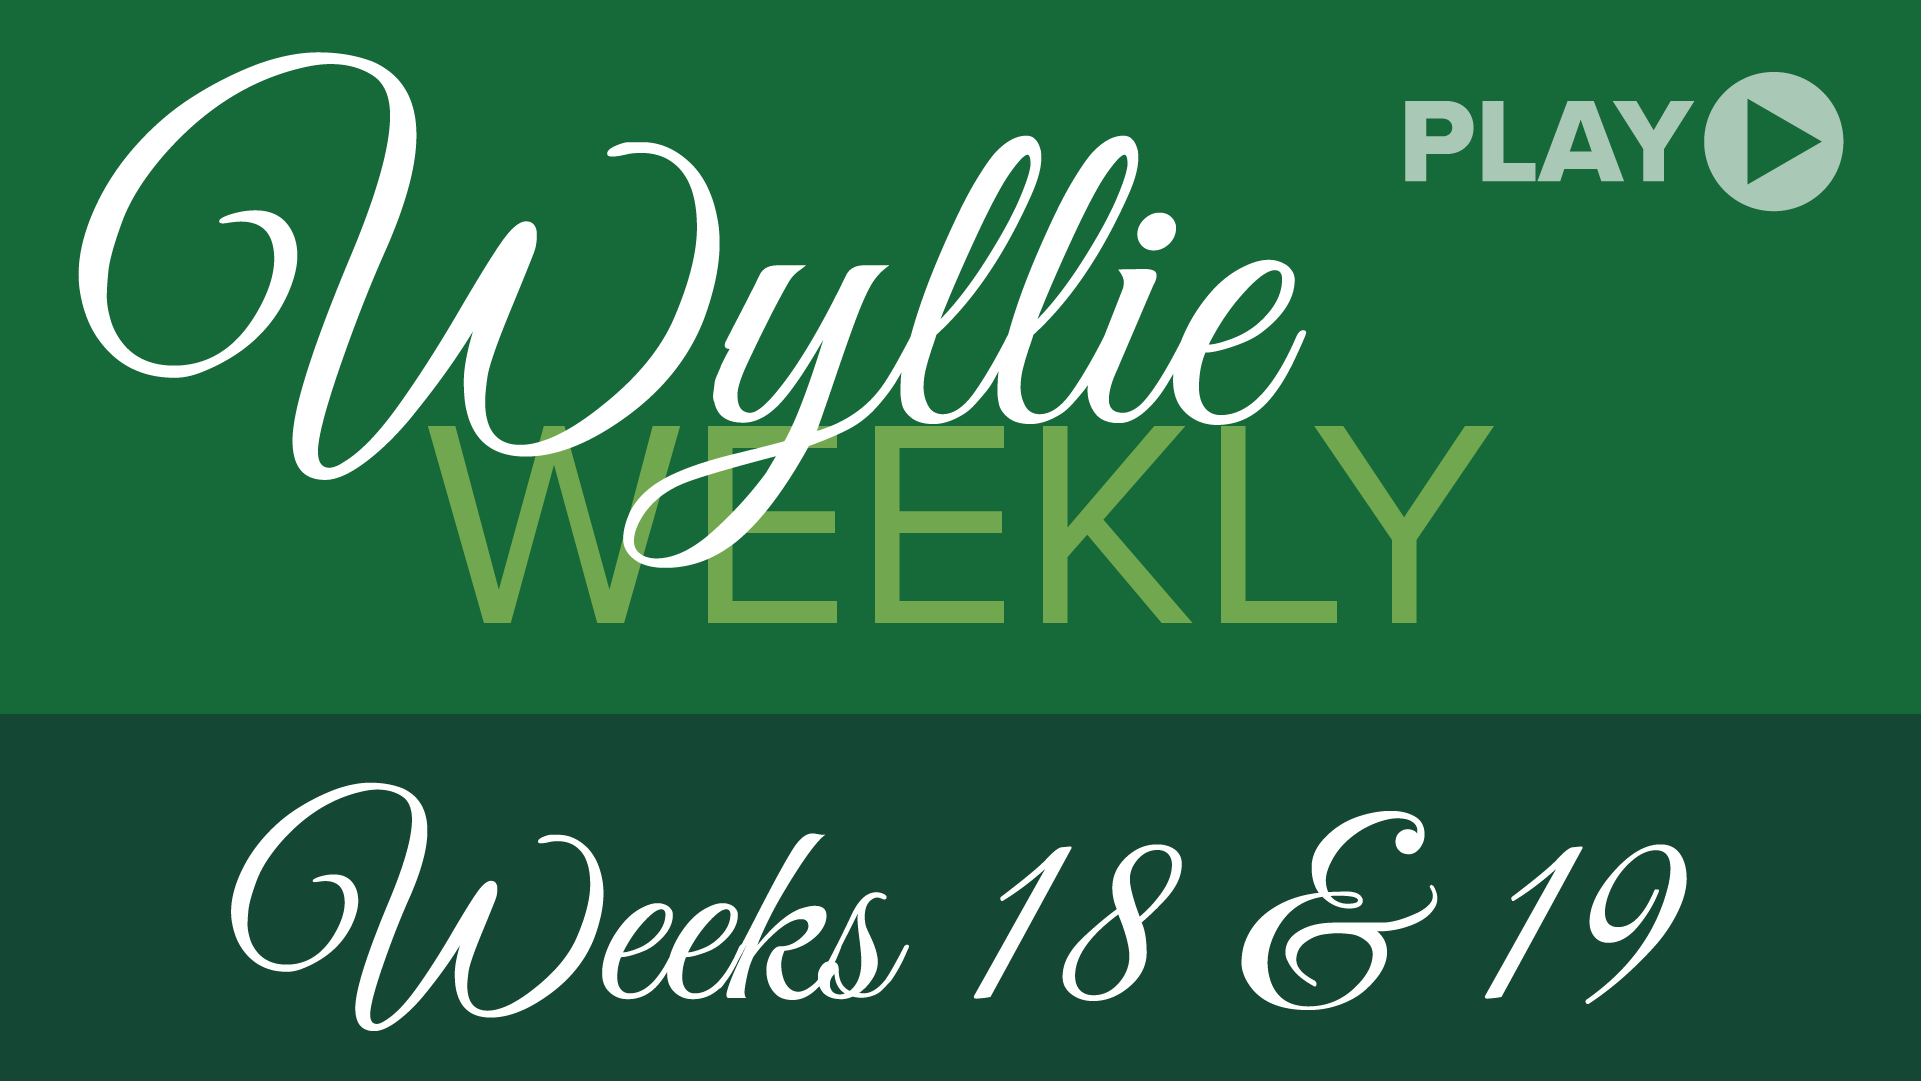 Wyllie Weekly 18-19